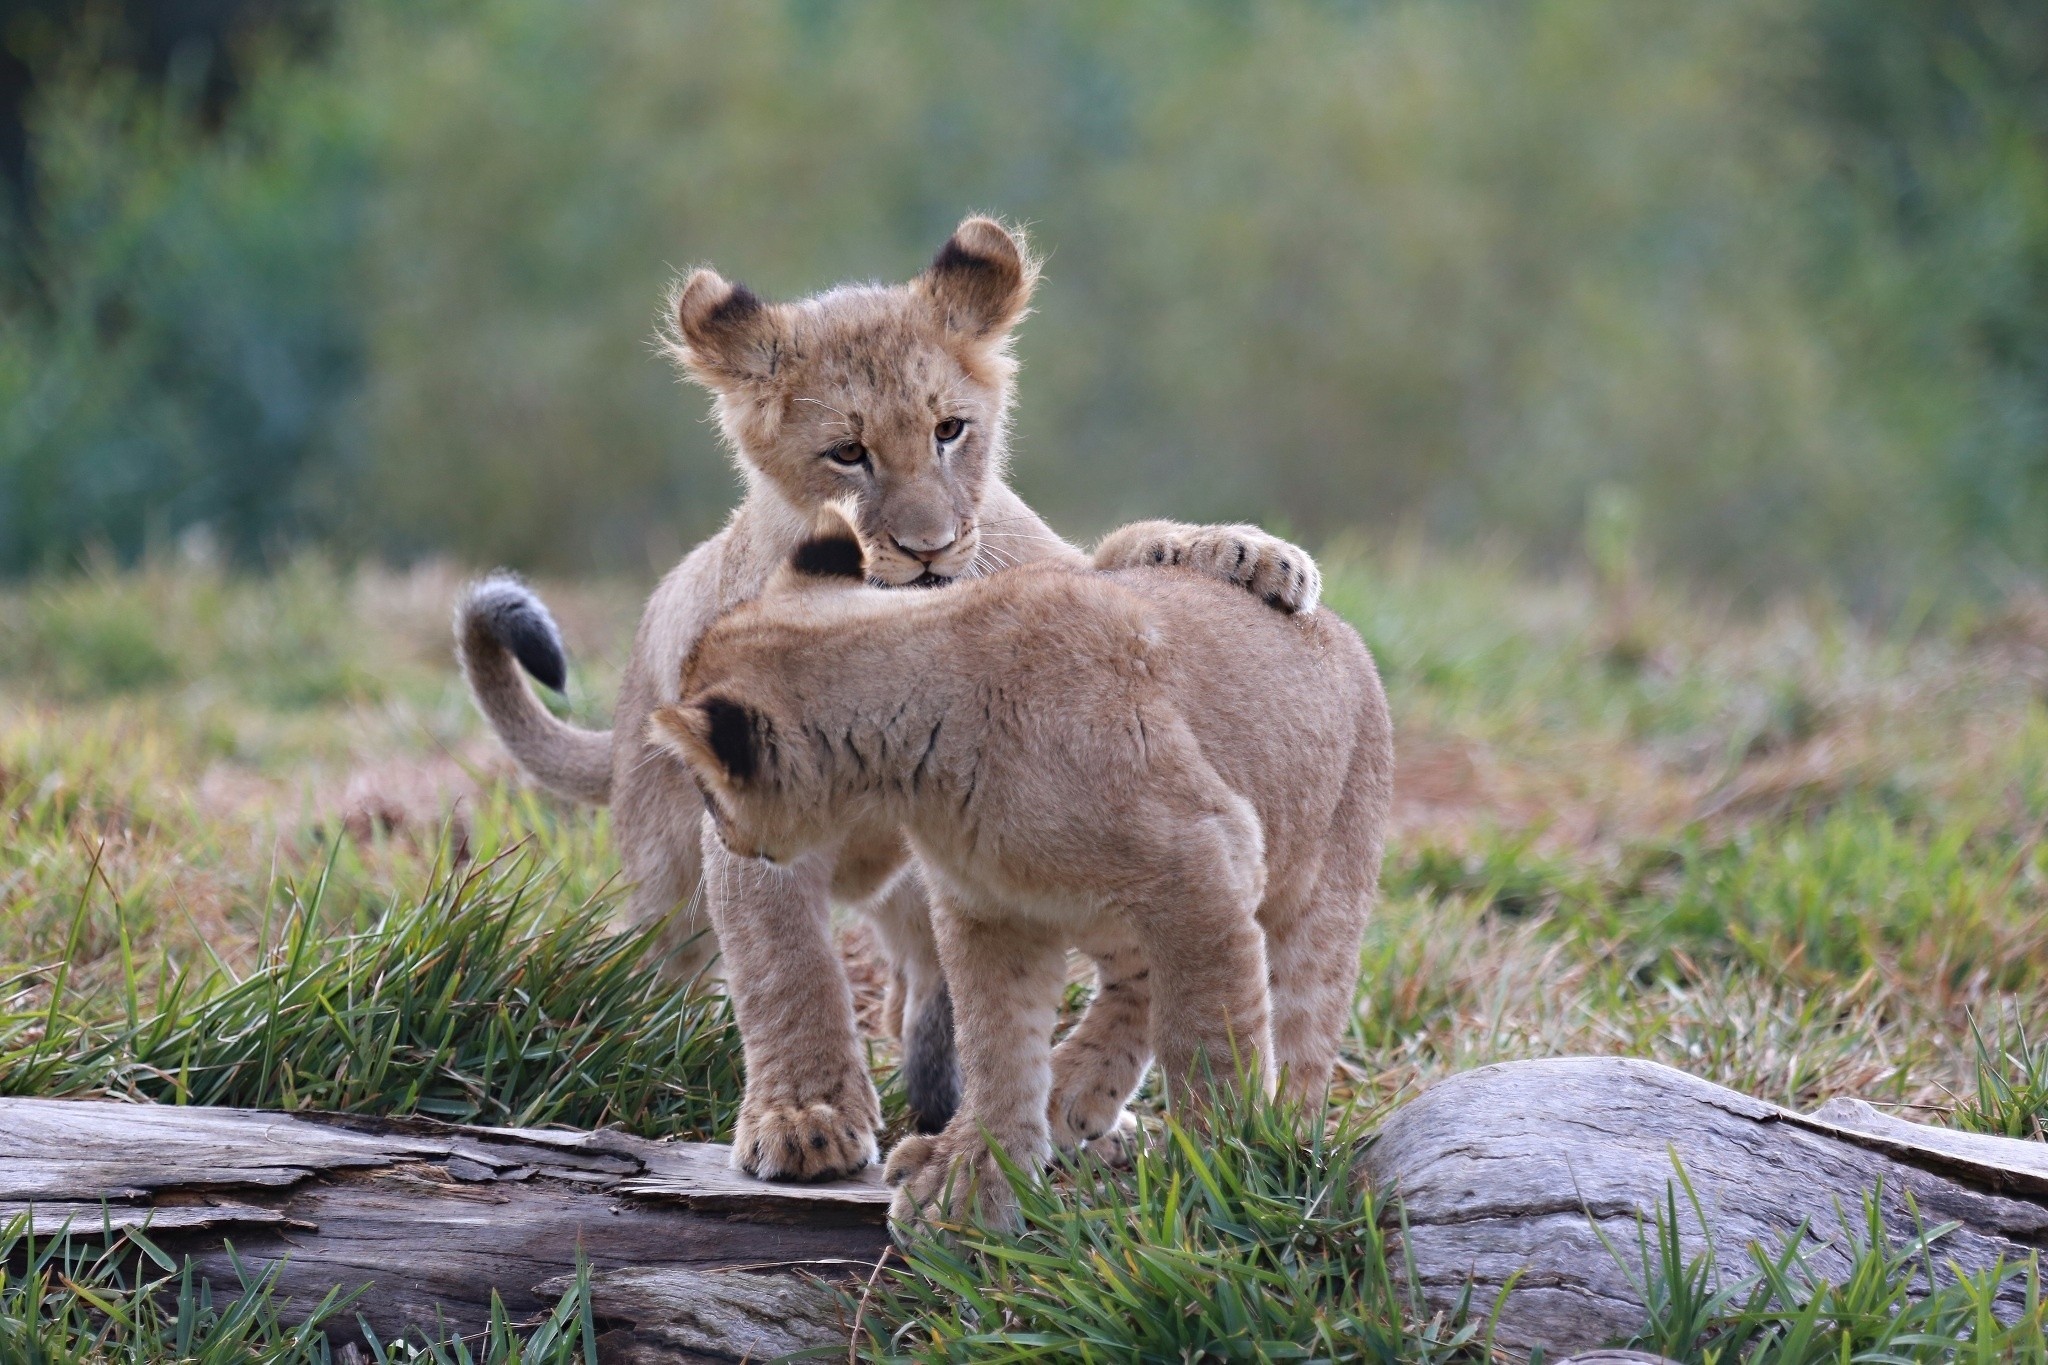 lion cubs, kittens, animals, predators, young, cubs